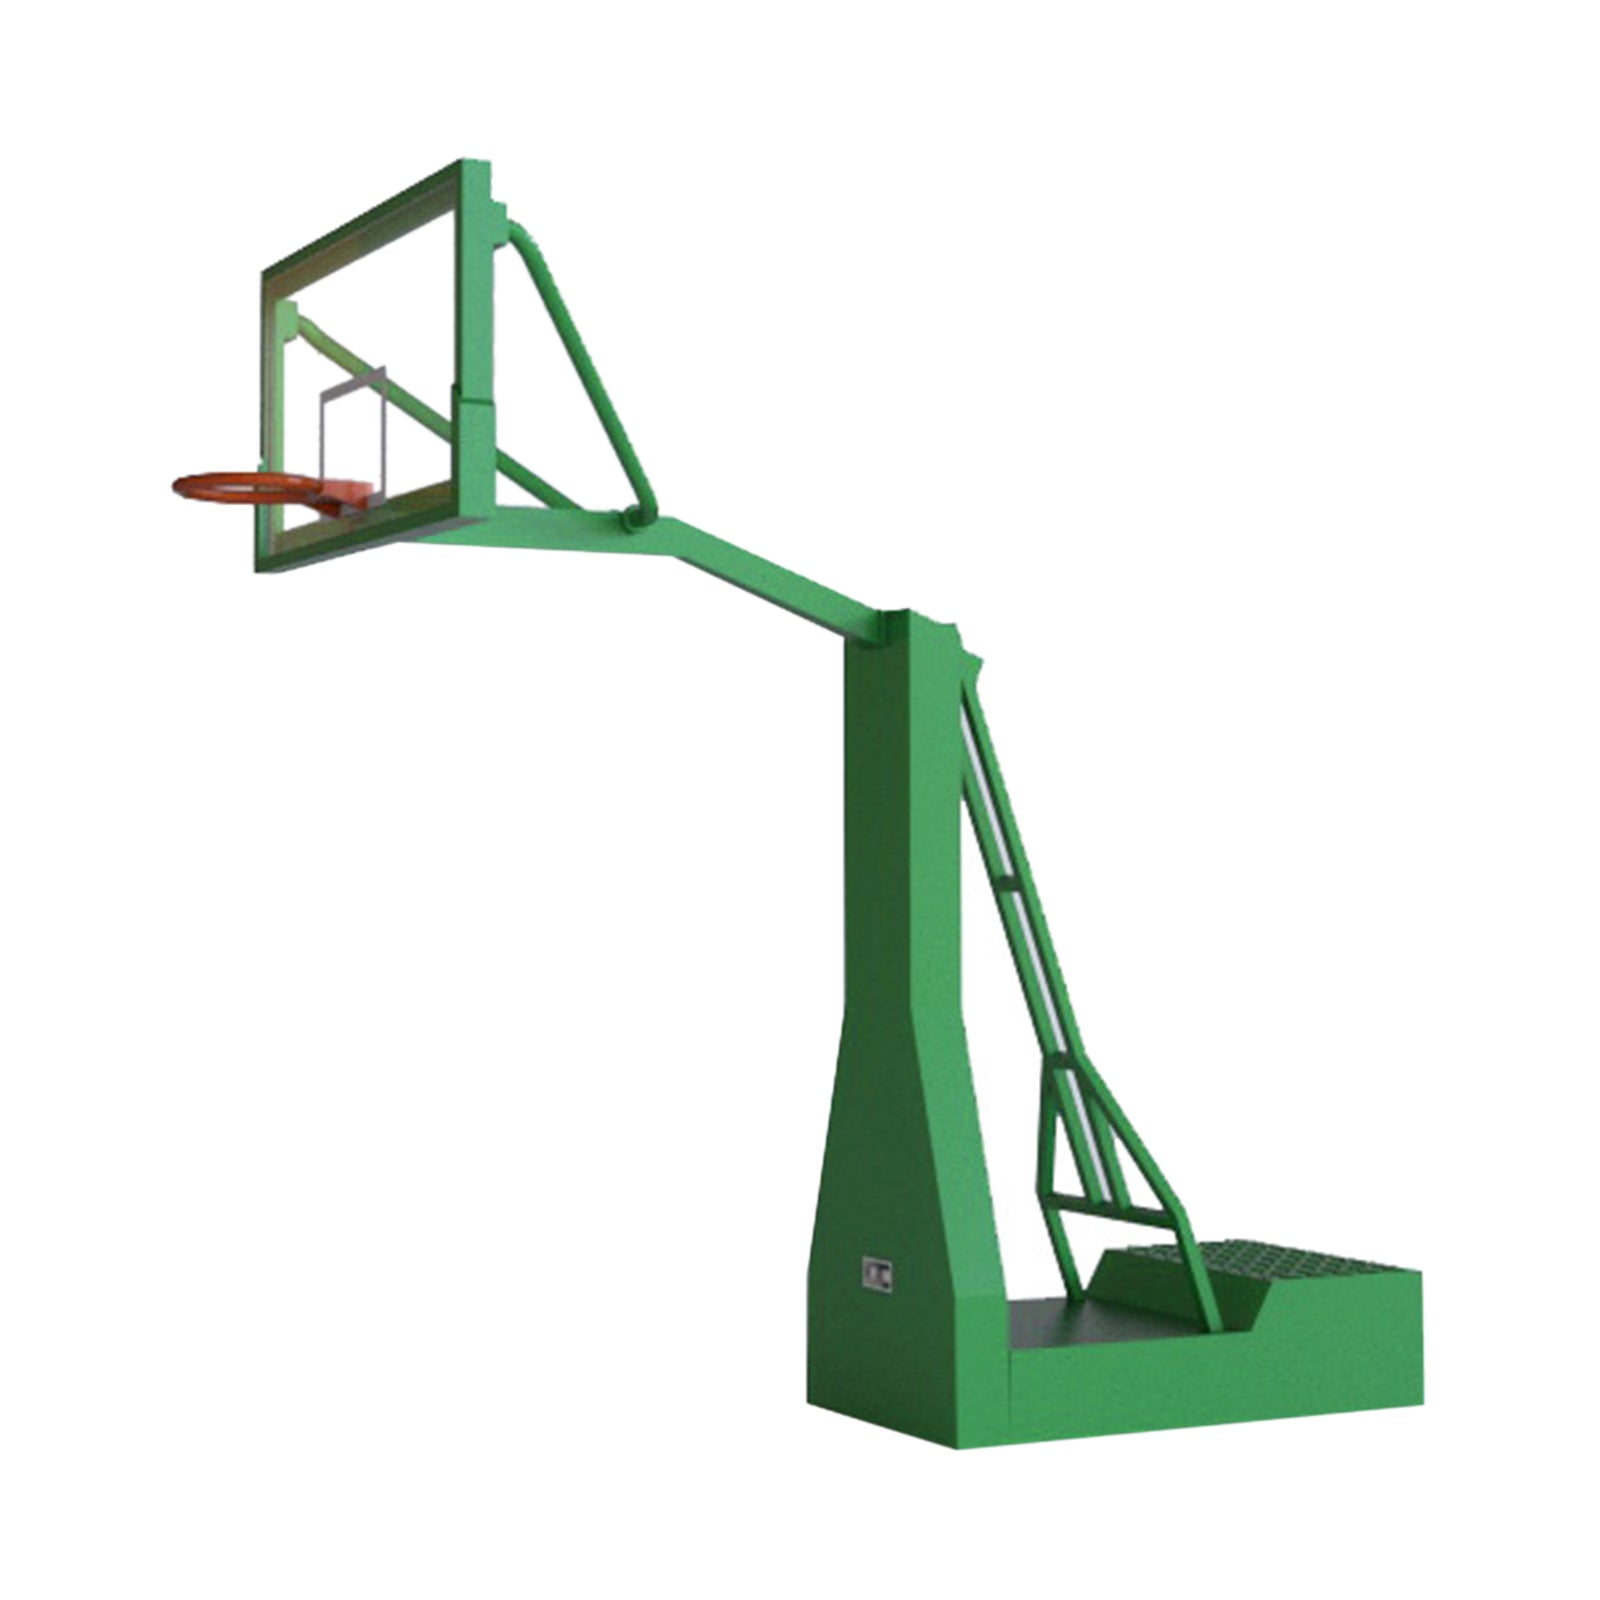 1/32 Plastic Basketball Hoop Model for Action Figures Scene Props Green